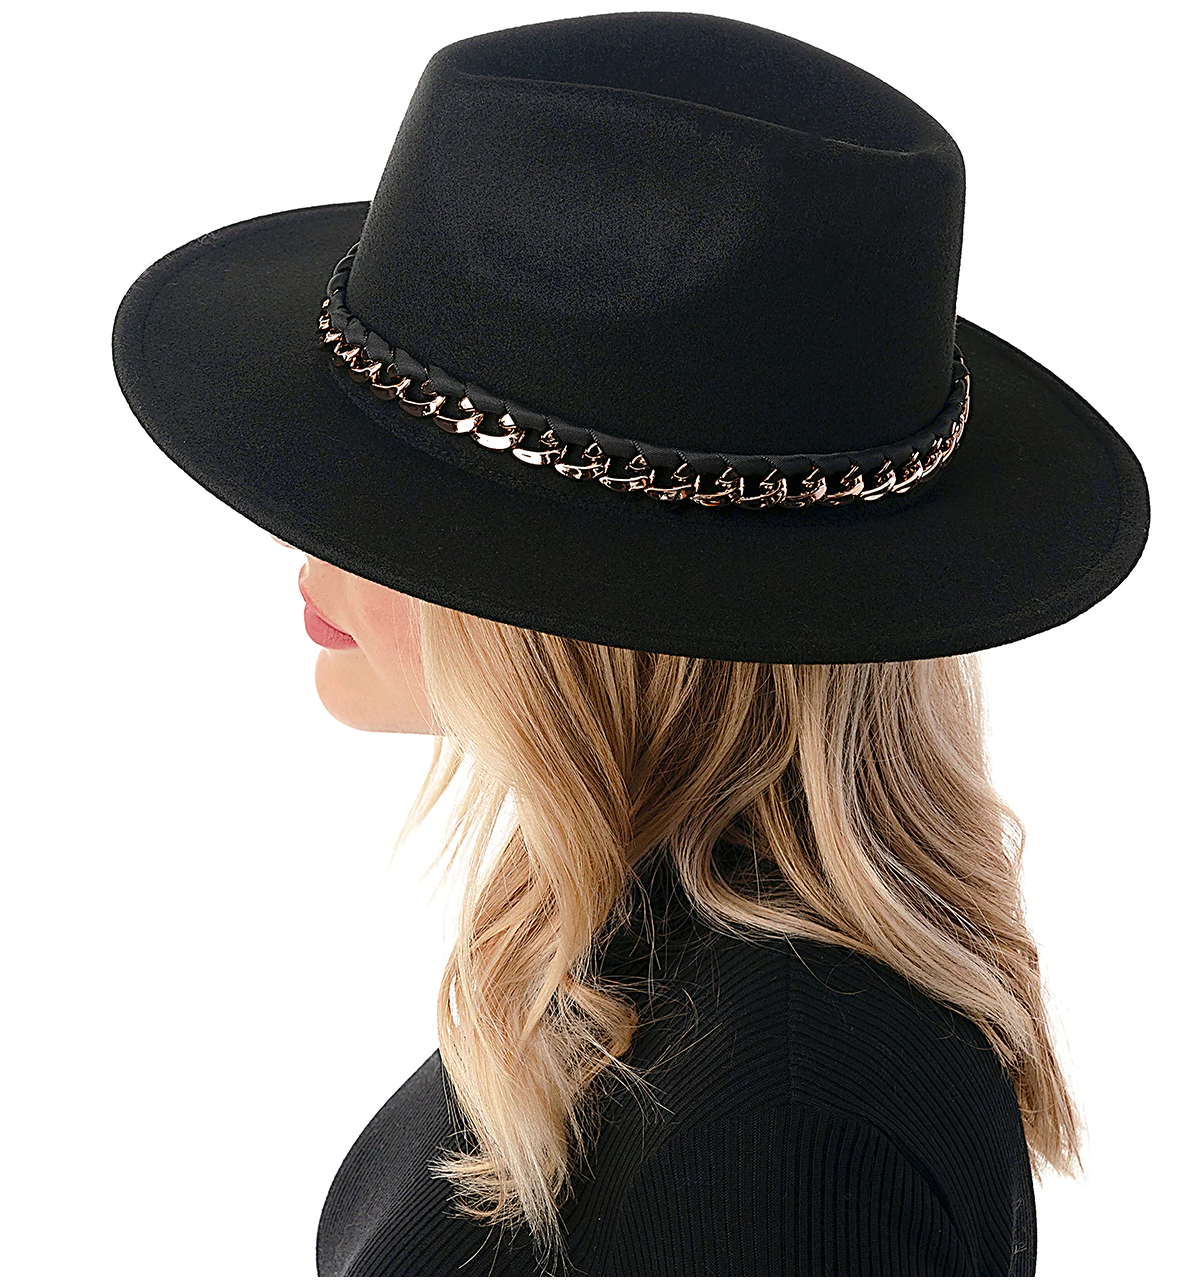 Marcus Adler The Charlotte Panama Hat in Black